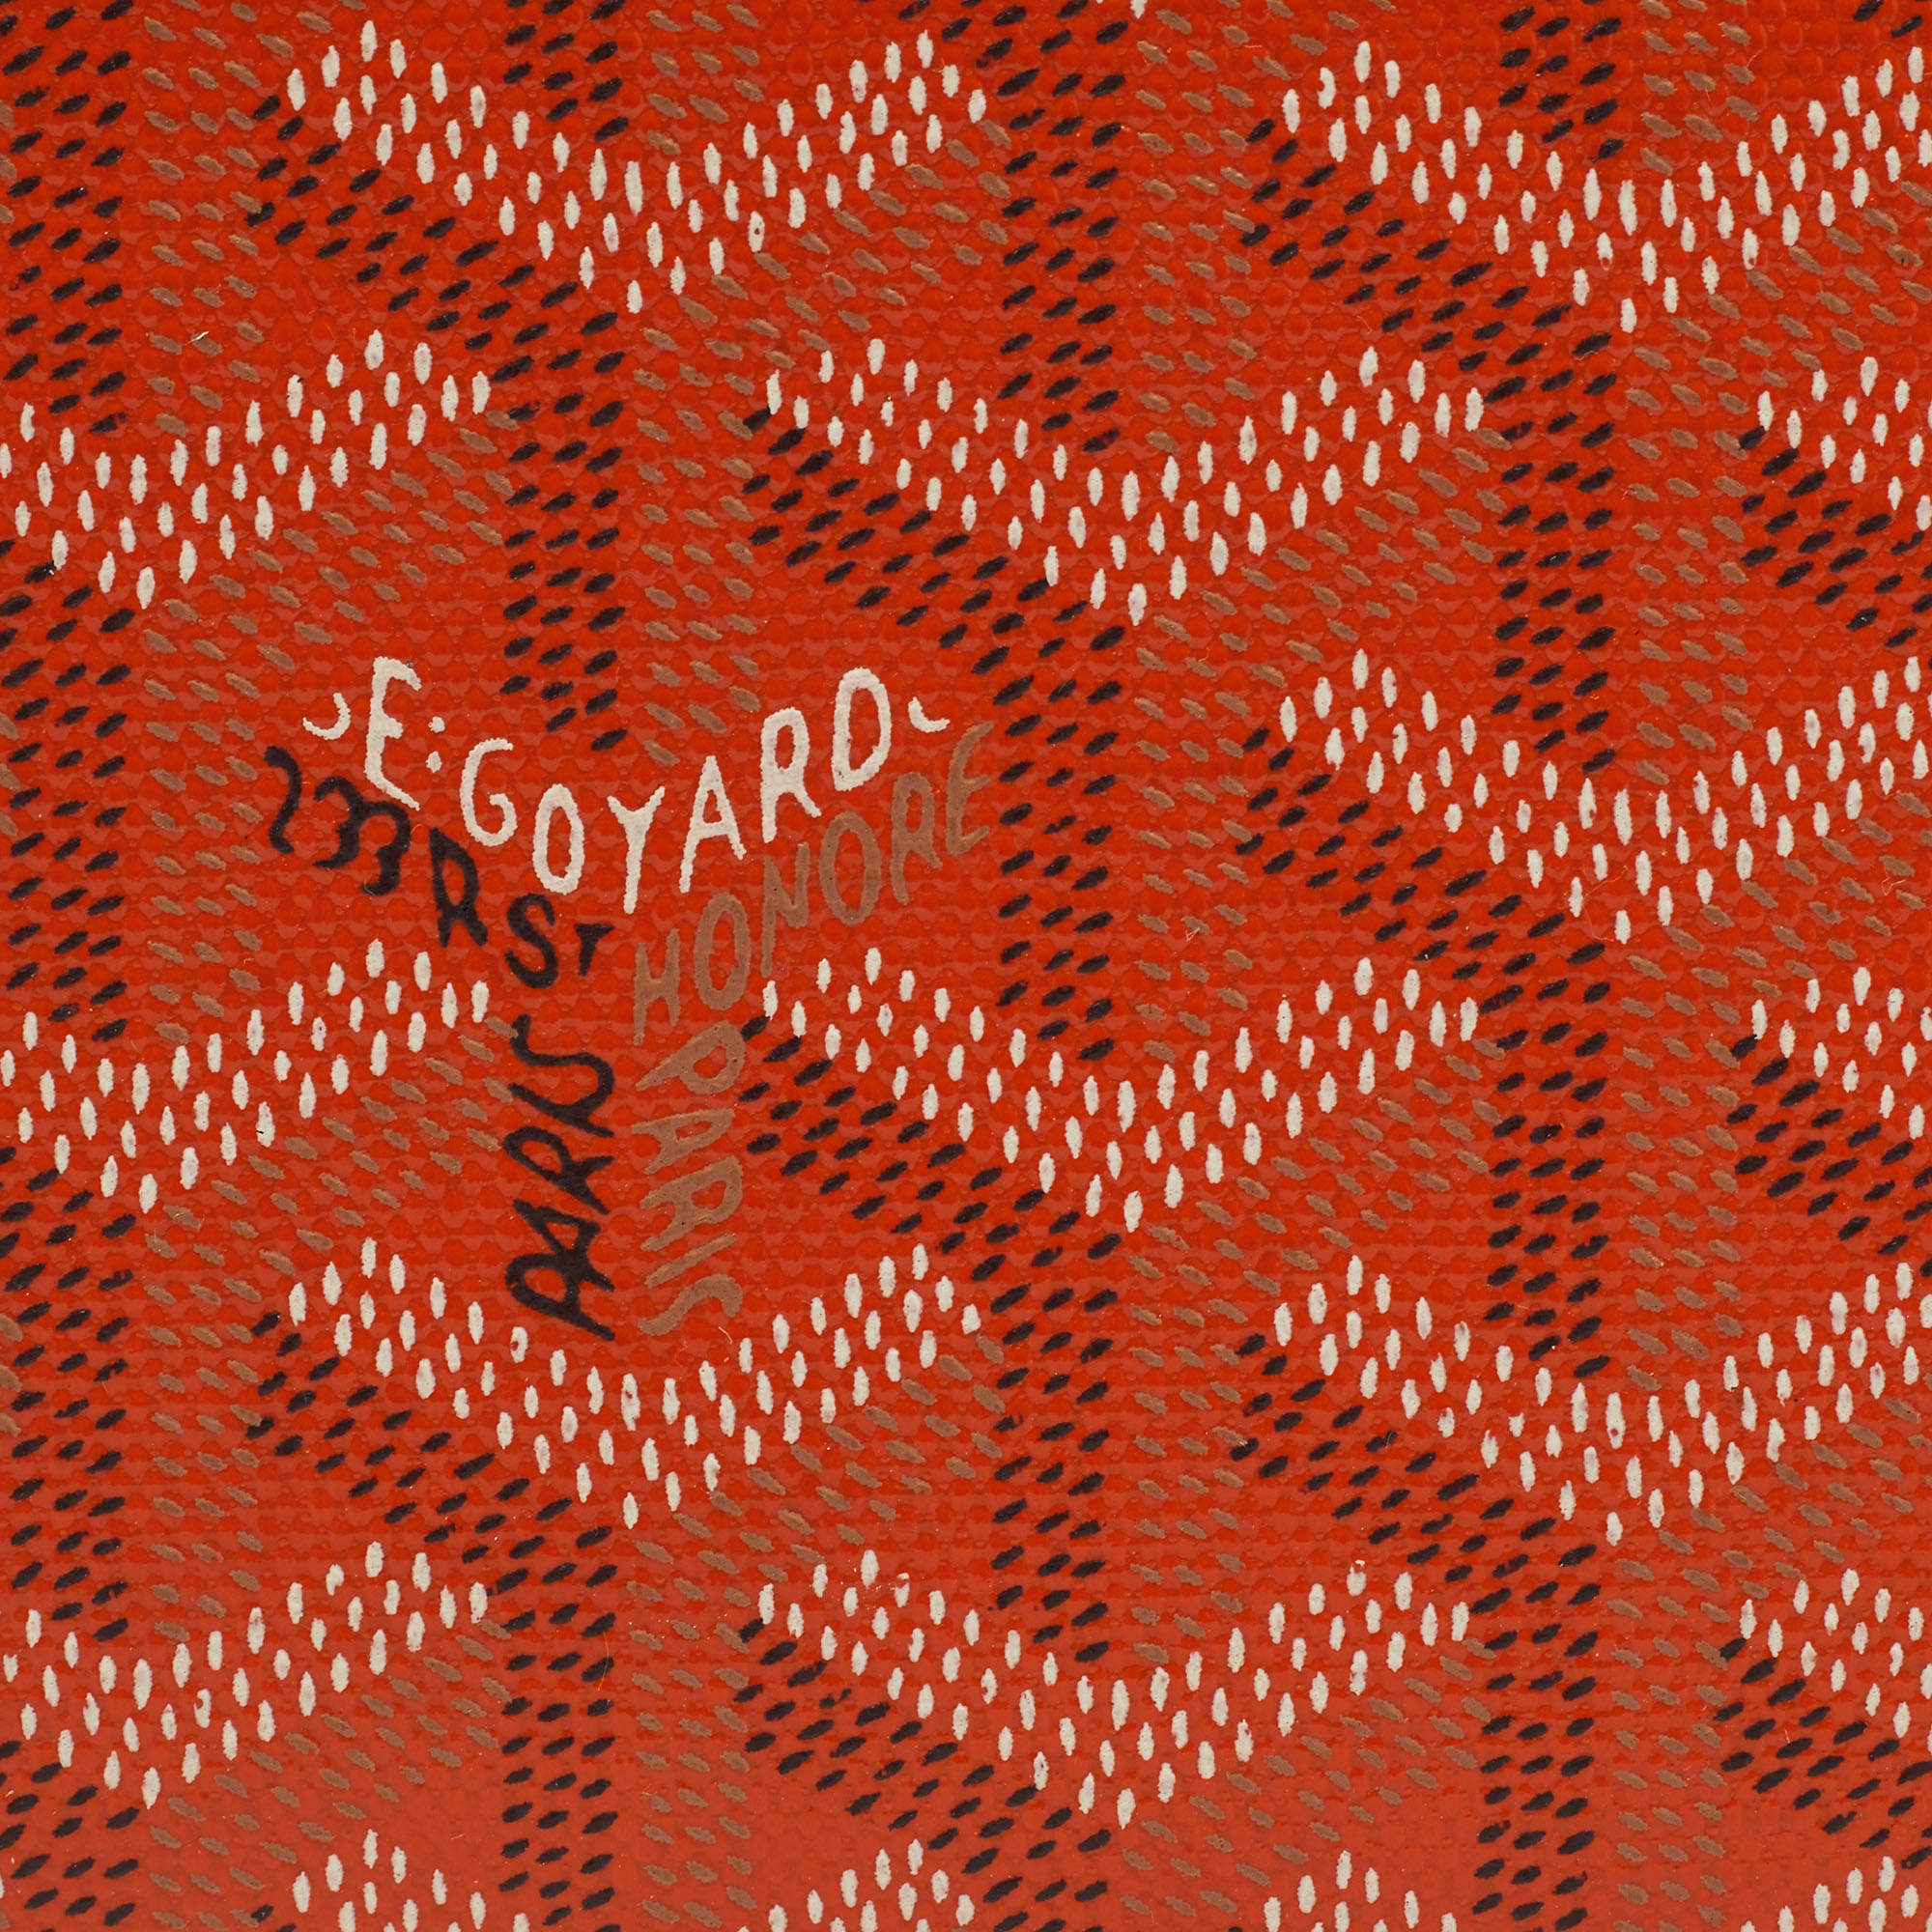 Goyard Vertical Bifold Wallet Coated Canvas Medium Red 2151832